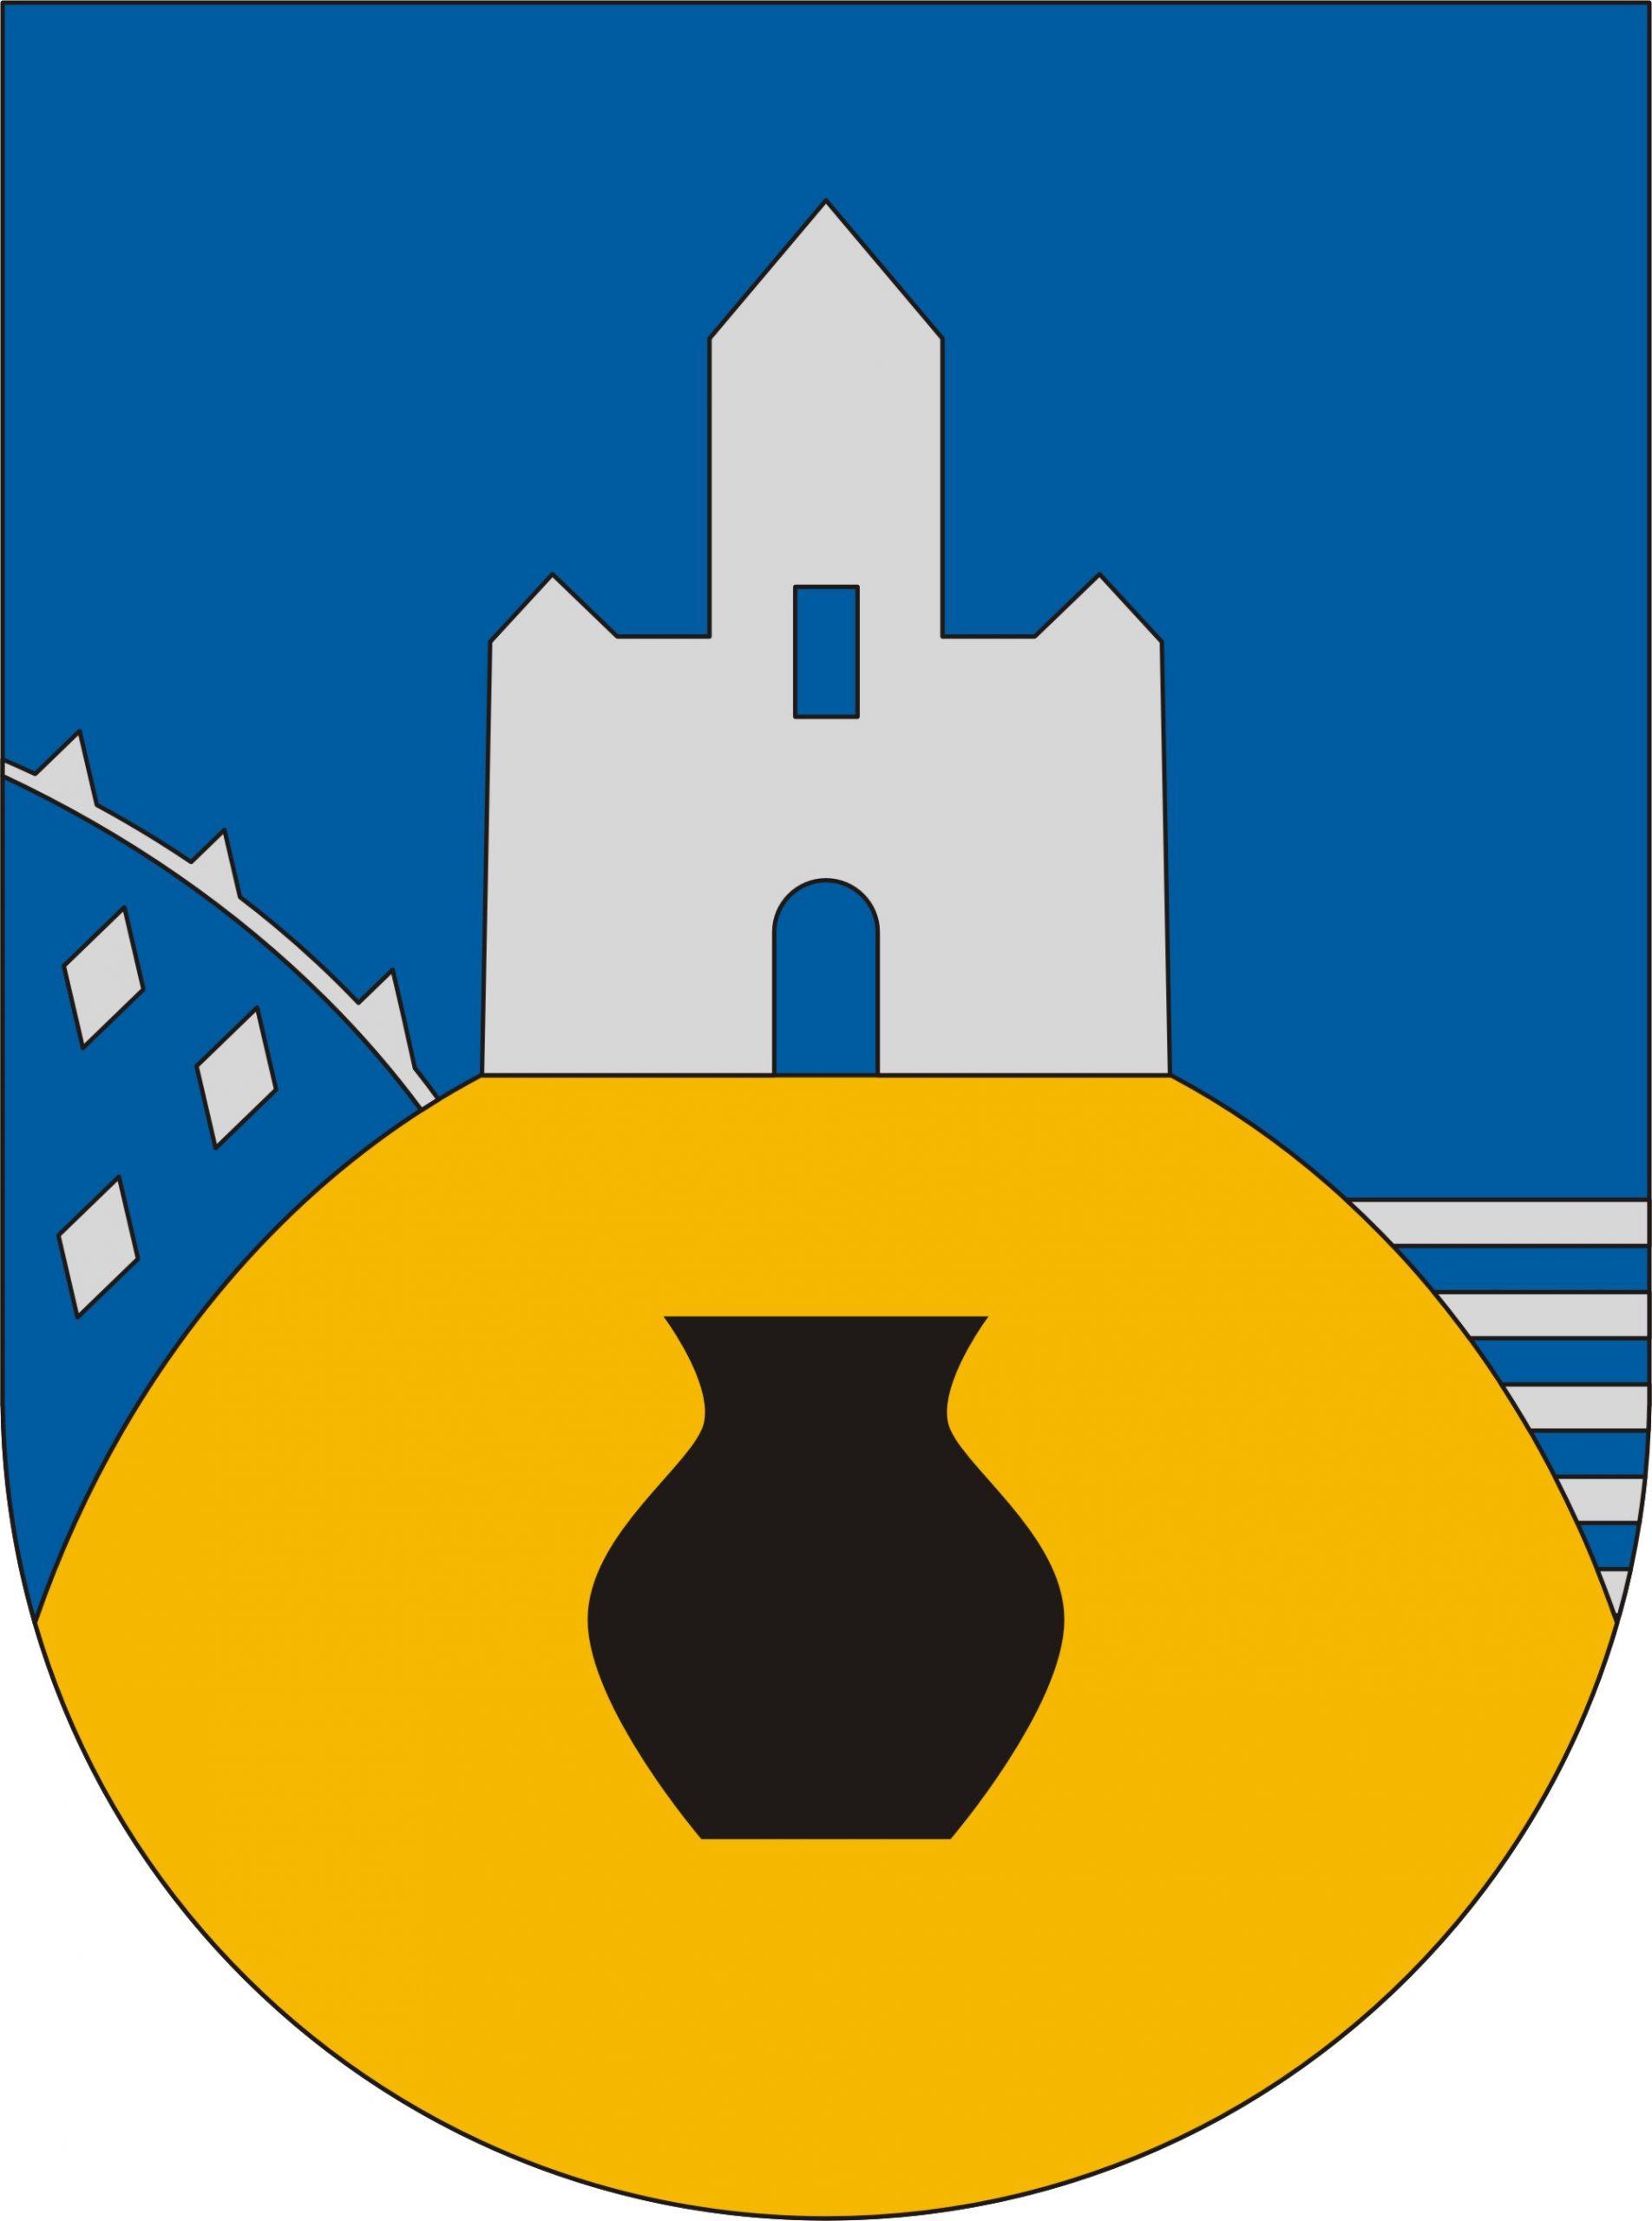 Gór község címere